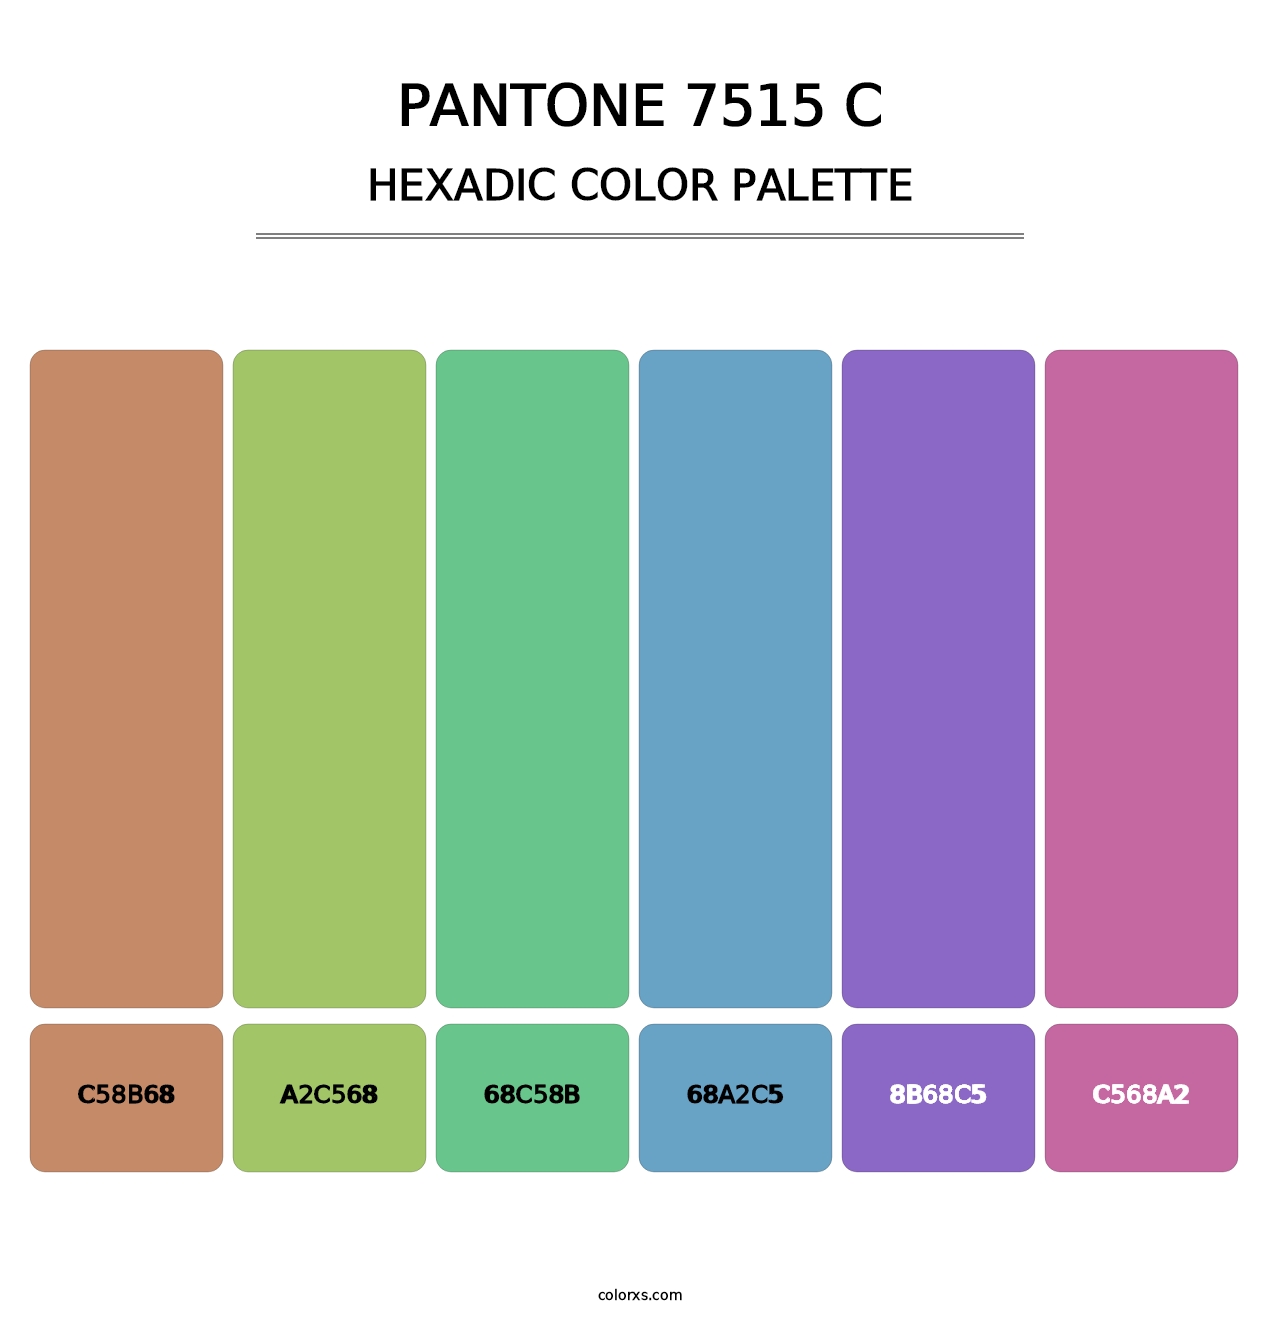 PANTONE 7515 C - Hexadic Color Palette